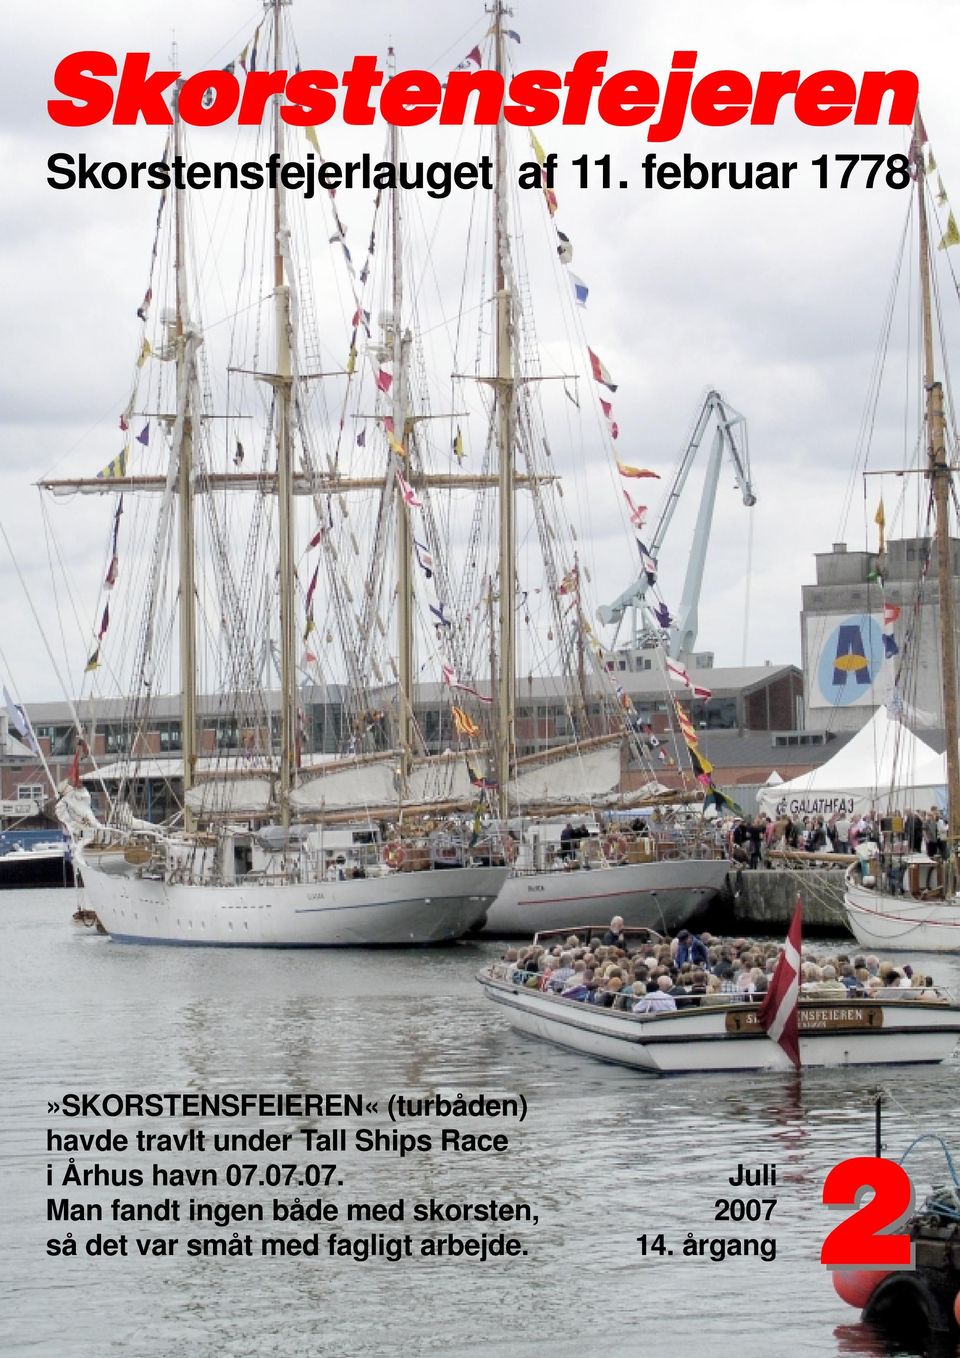 Tall Ships Race i Århus havn 07.